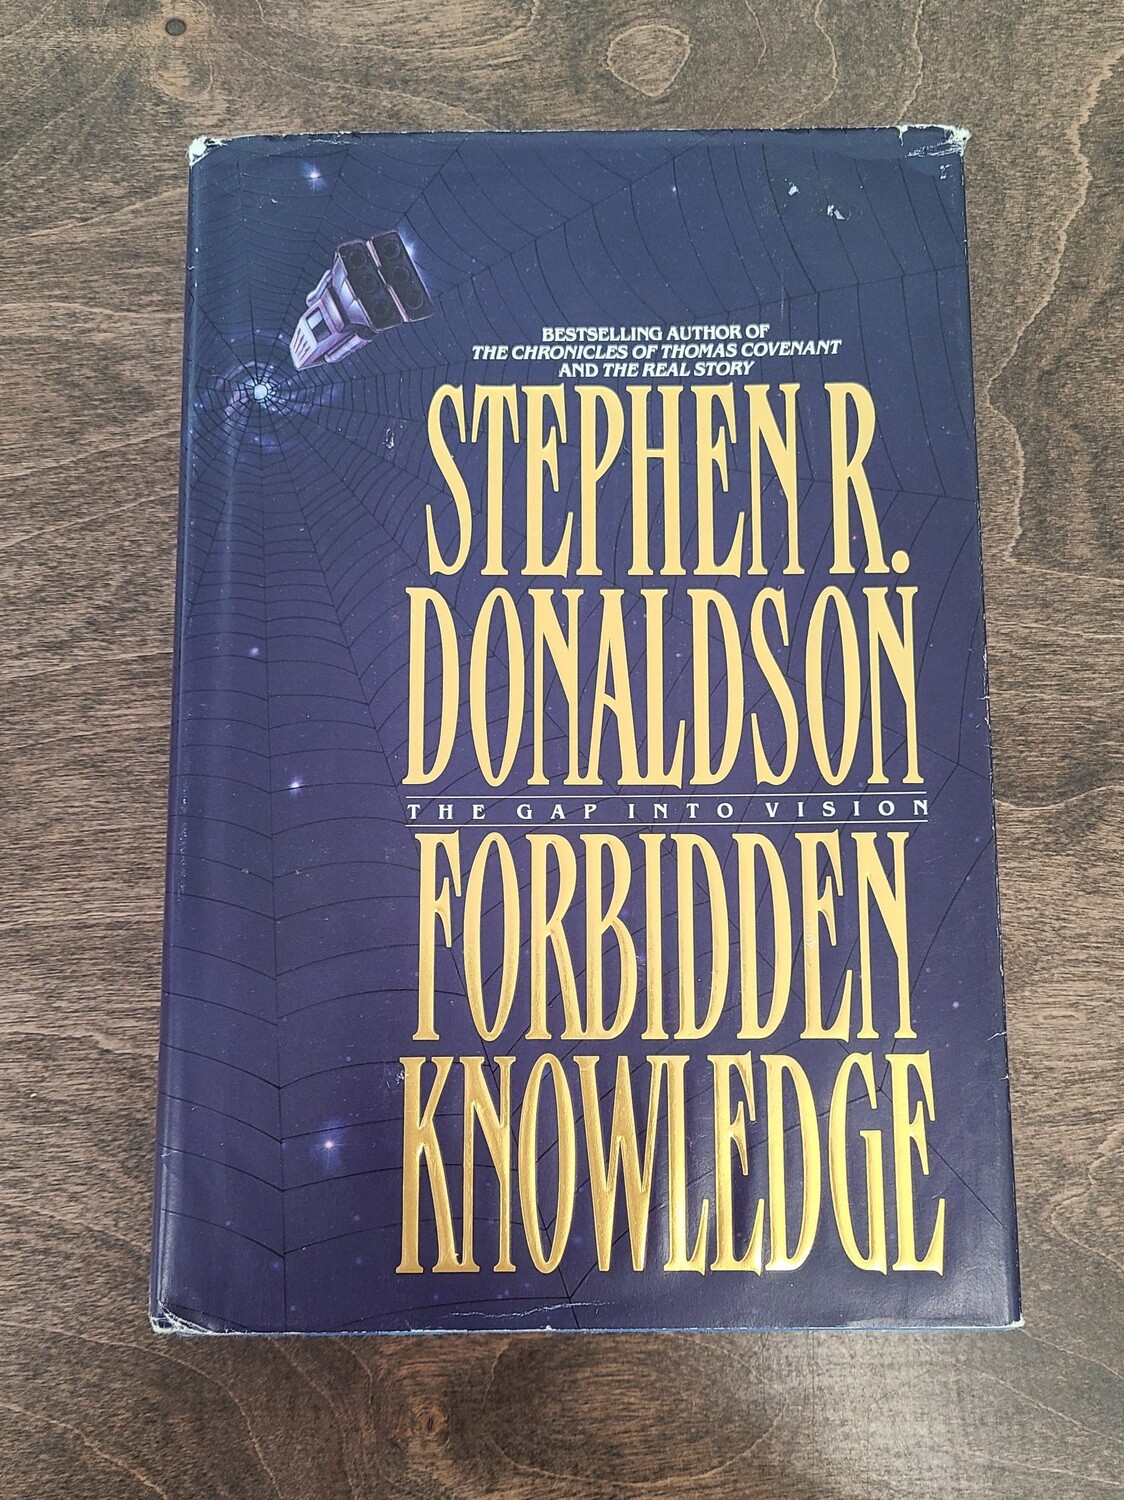 Forbidden Knowledge by Stephen R. Donaldson